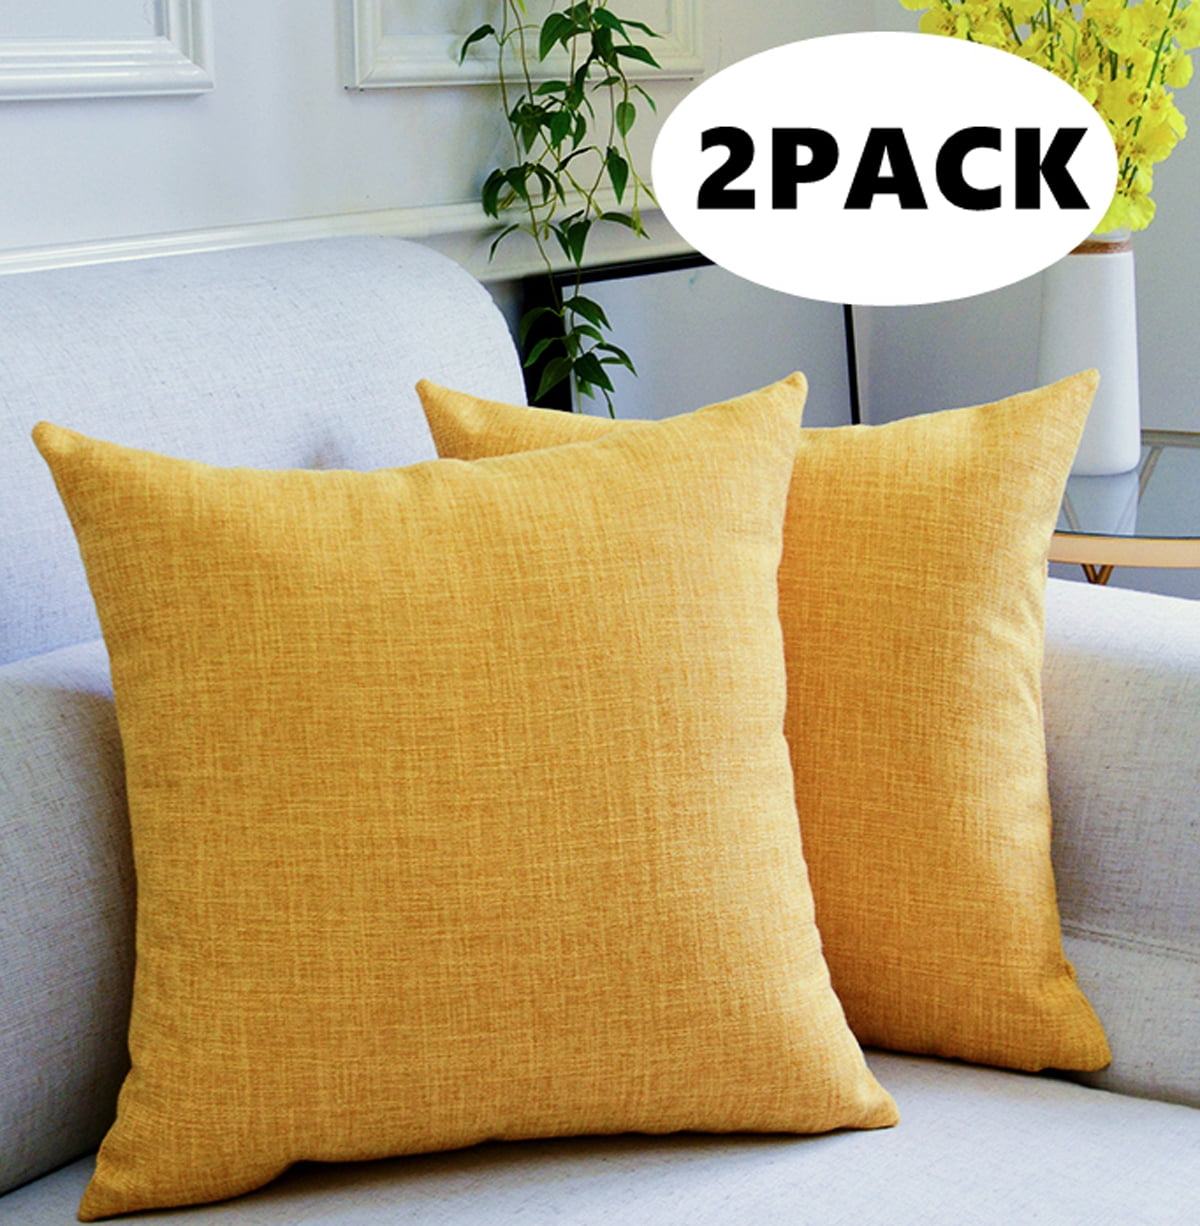 2PC Sofa Pillow Covers Throw Cushion Square Case Home Decor Gift 18x18" 